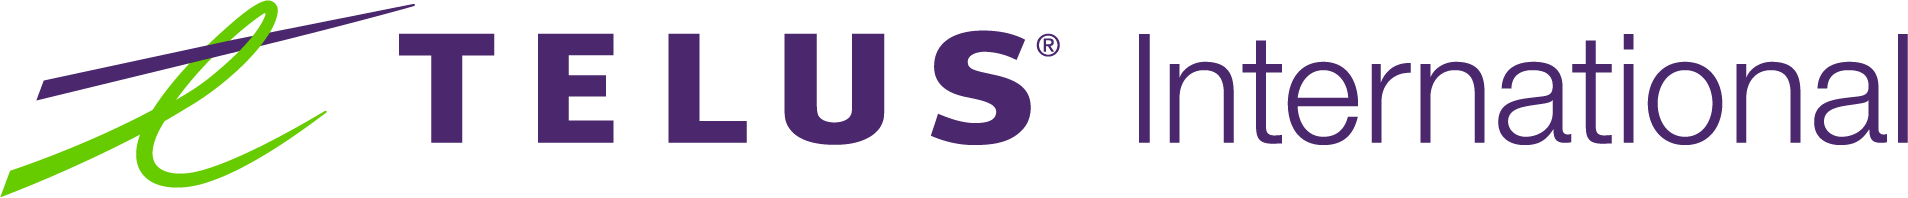 Telus International logo button